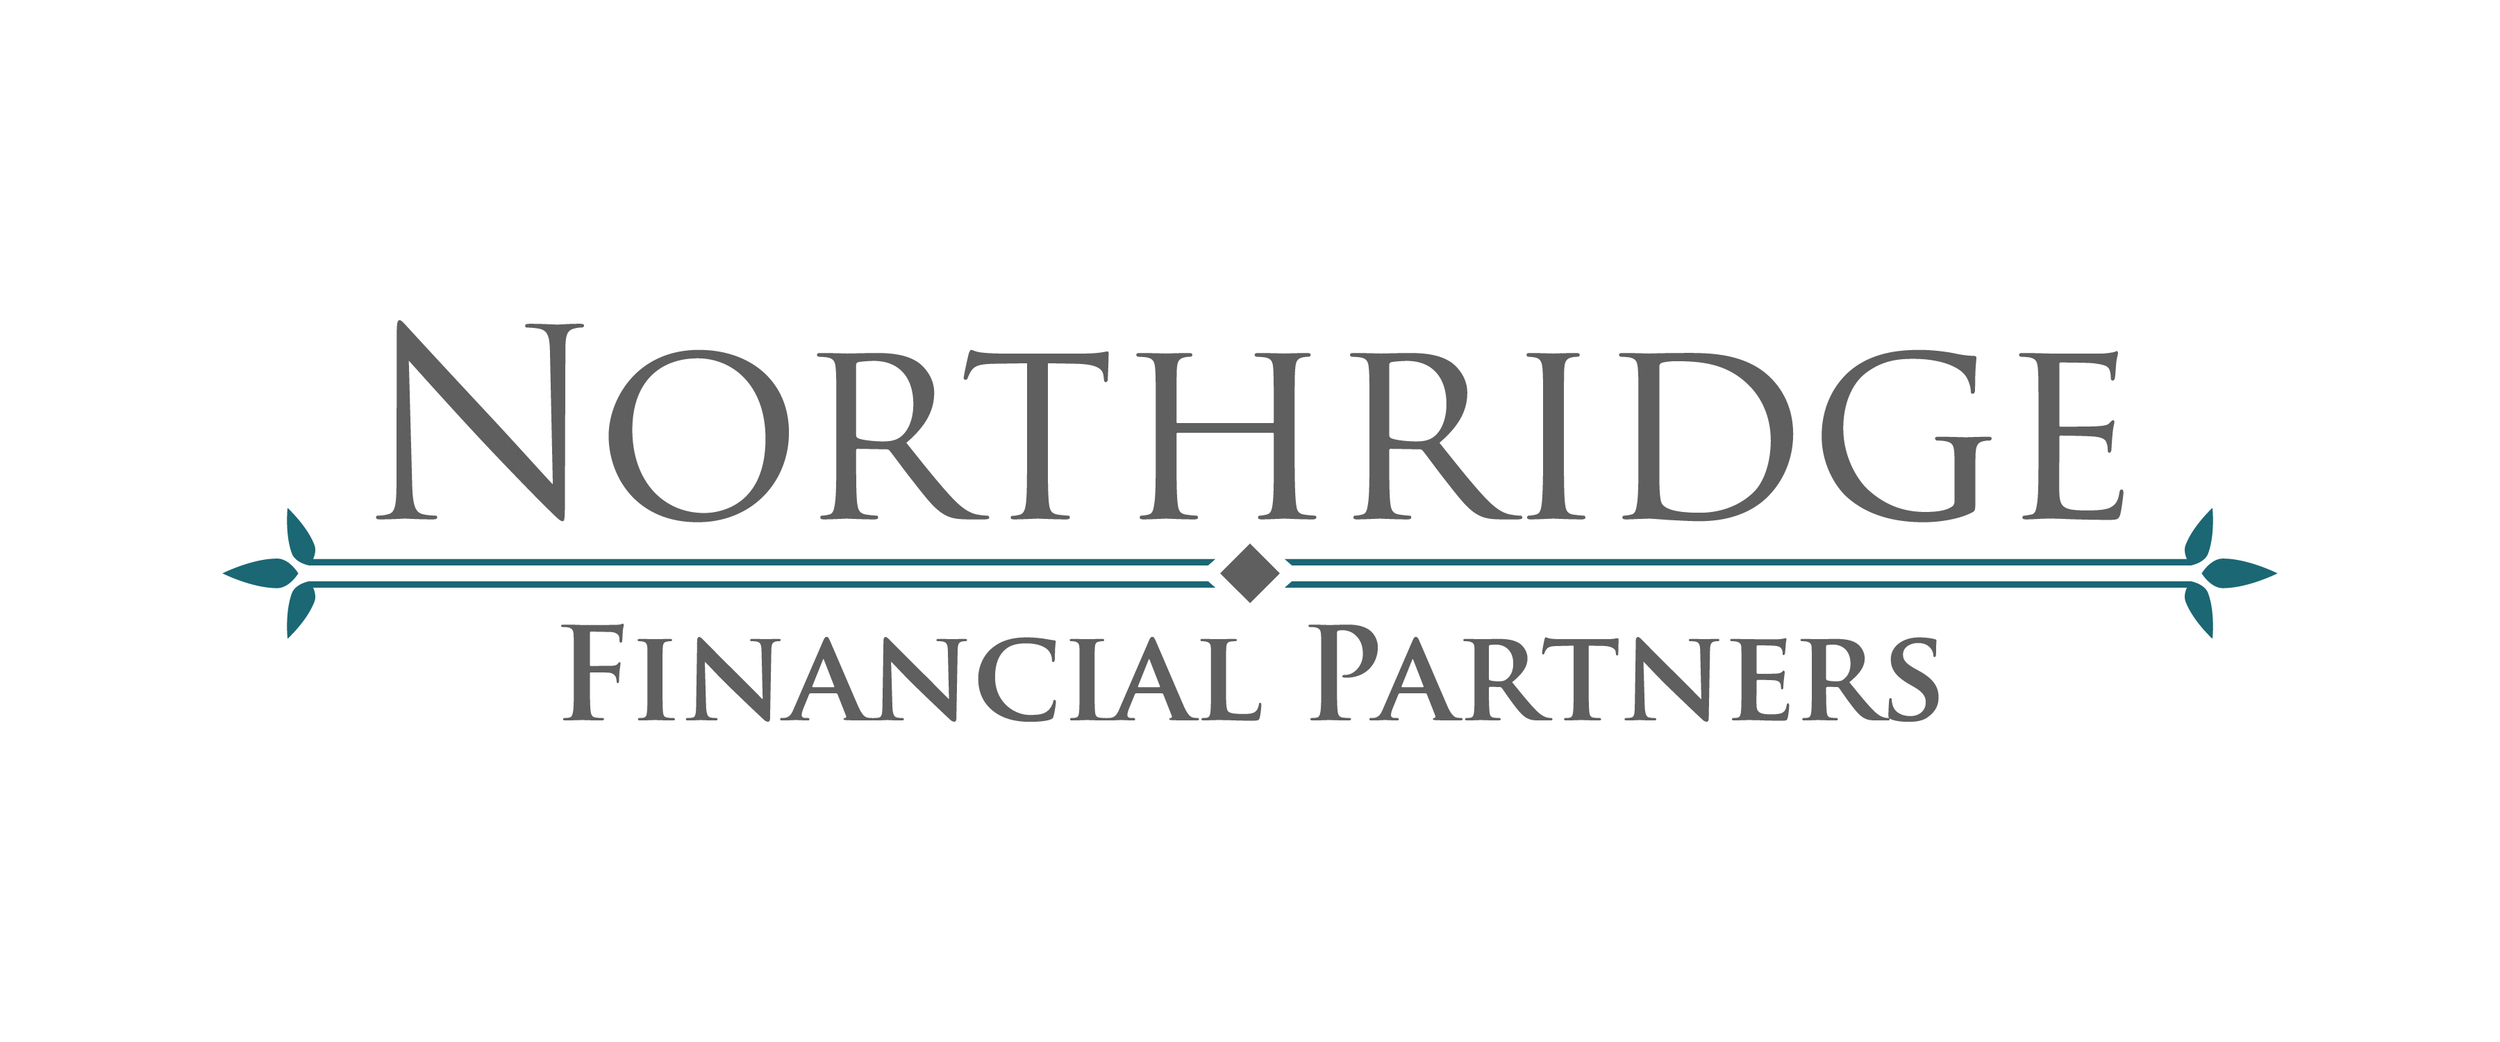 Northridge Financial Partners